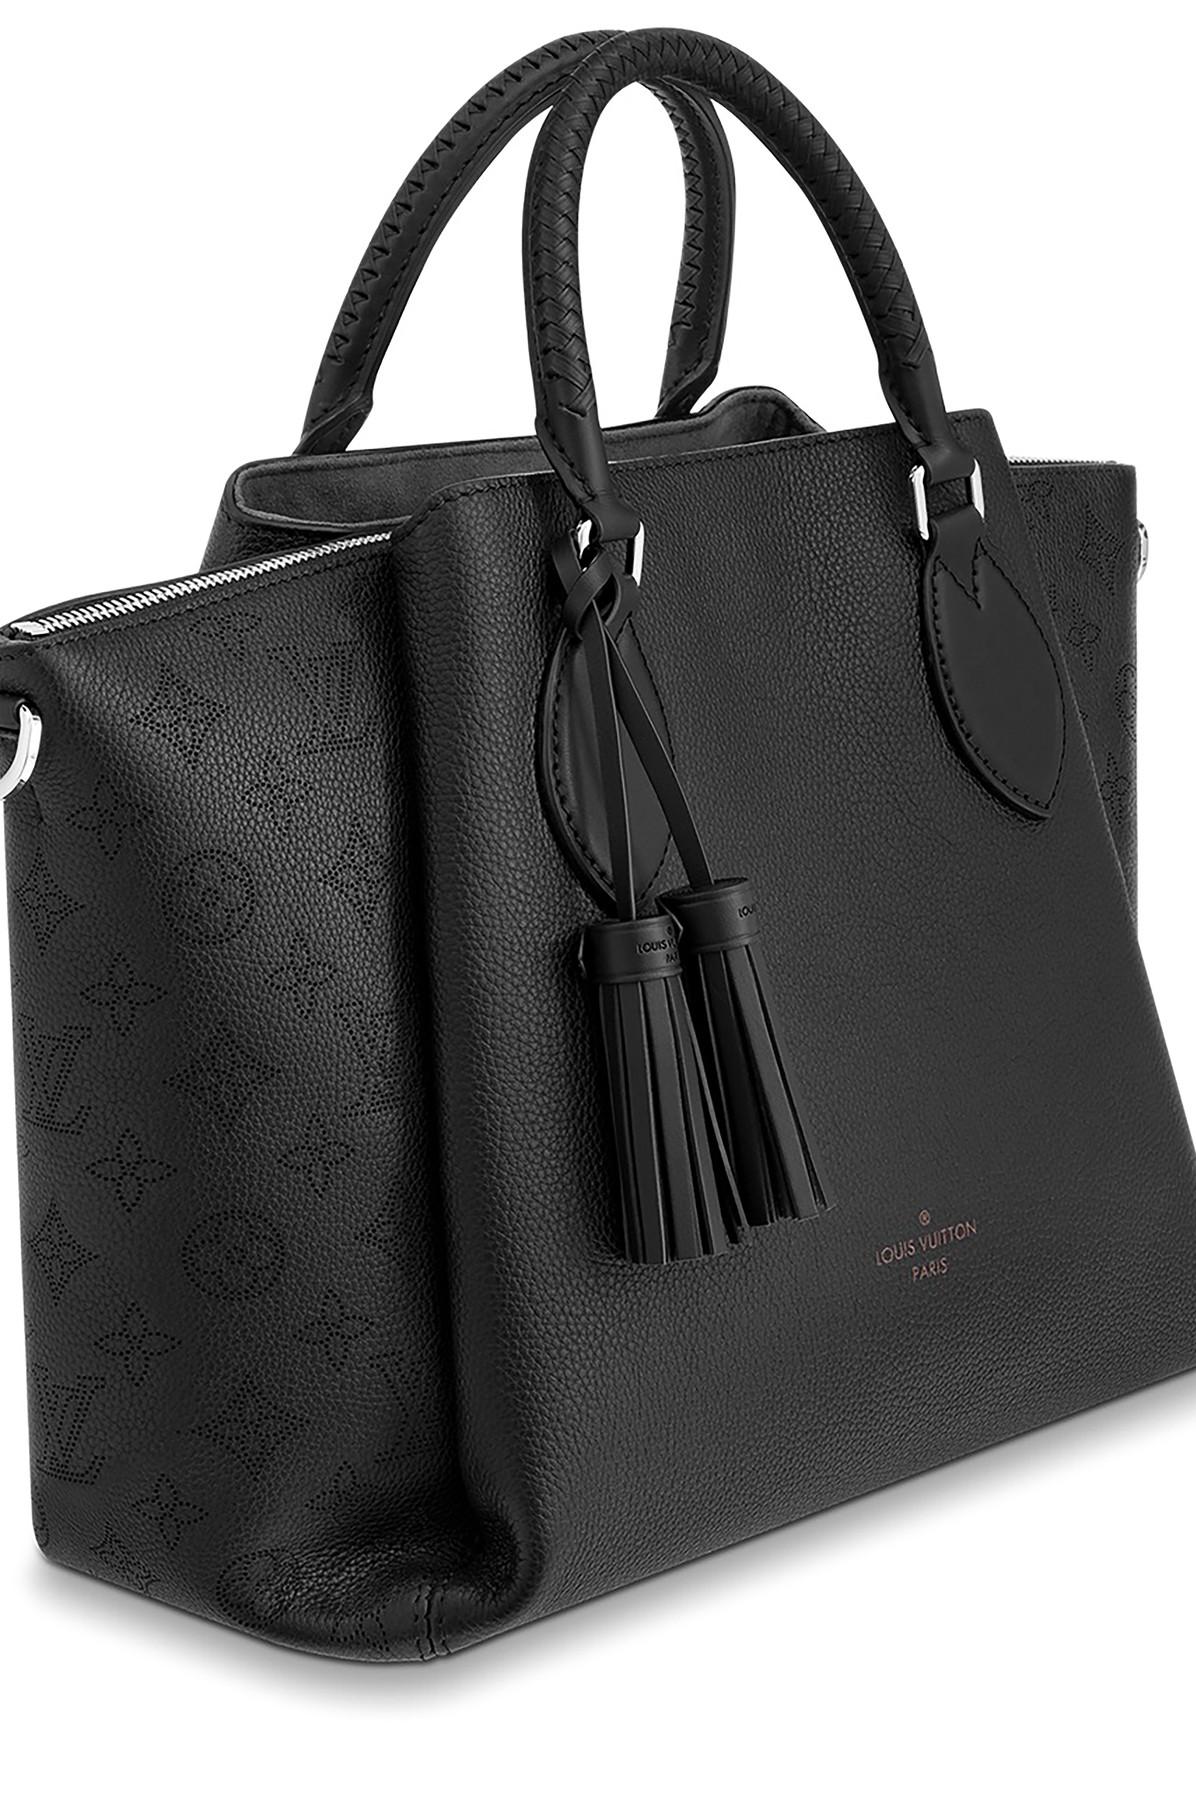 Louis Vuitton Haumea Handbag Mahina Leather Black 1706191